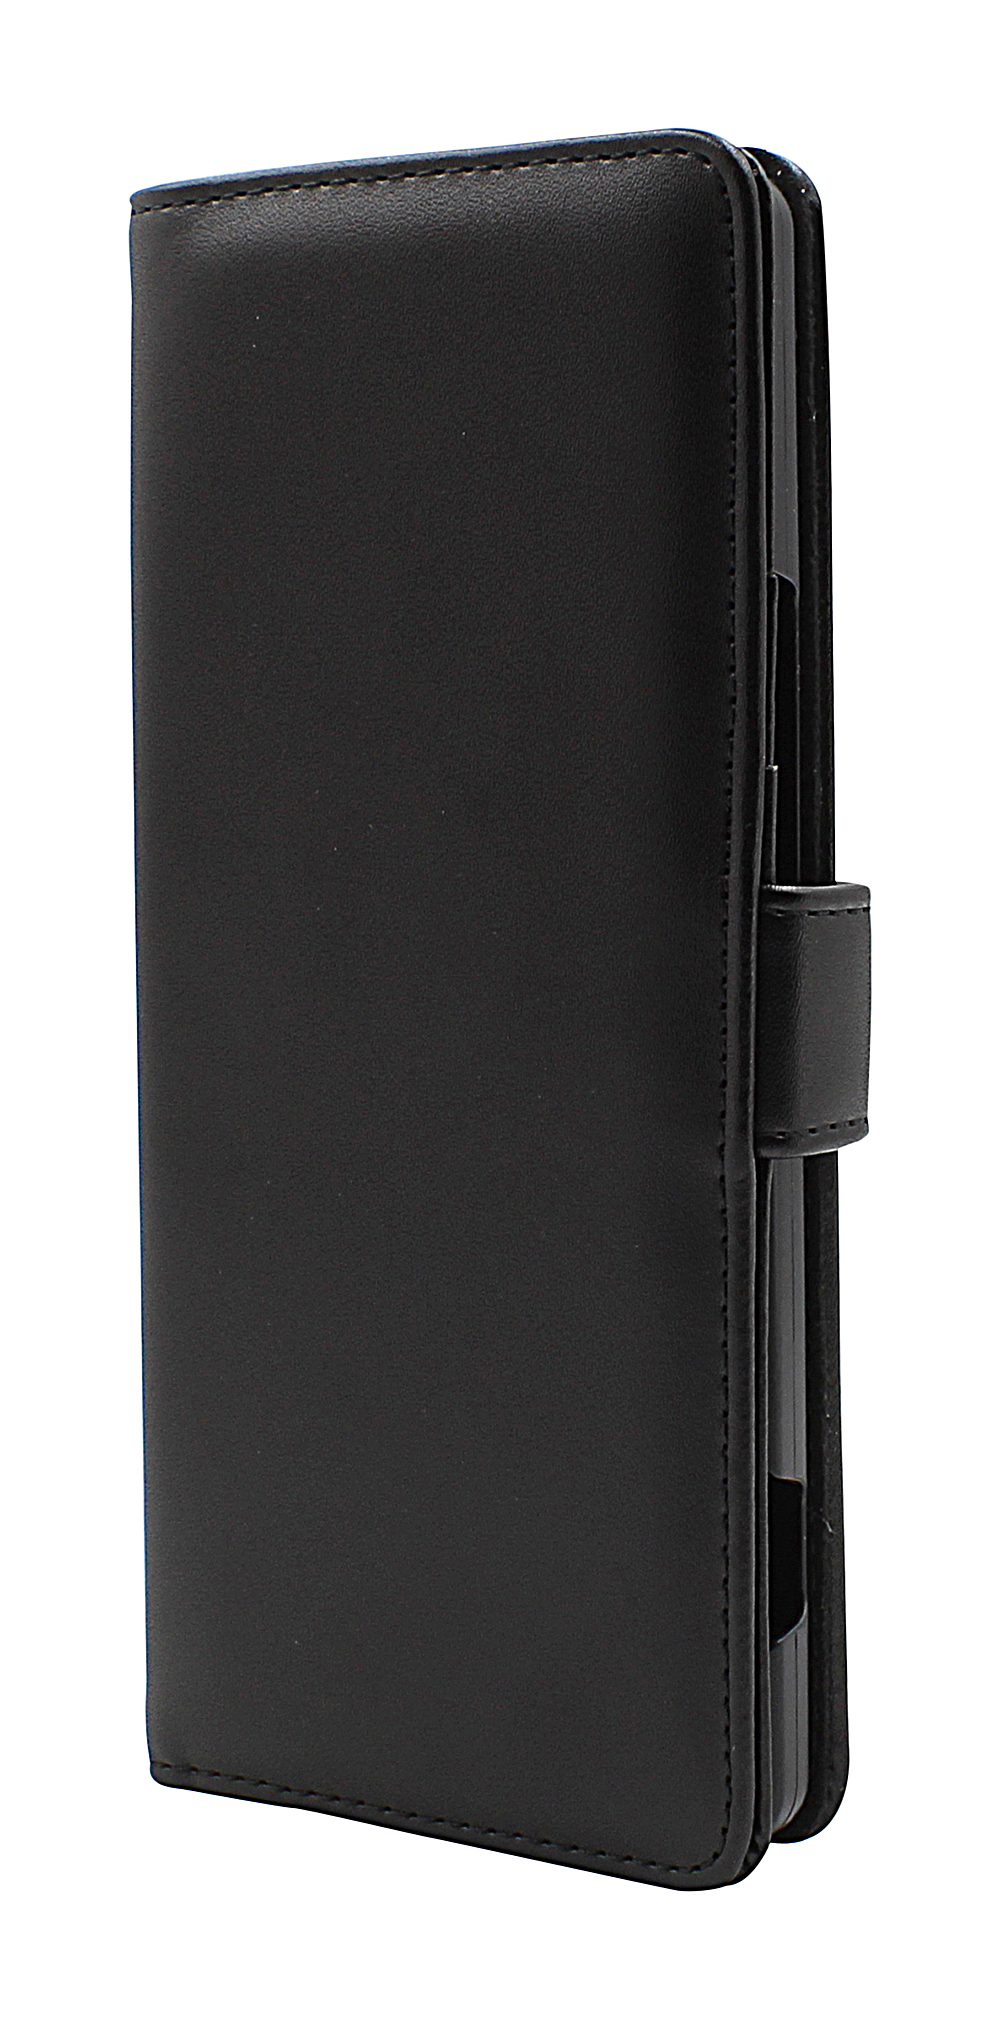 Skimblocker Lommebok-etui Sony Xperia 1 II (XQ-AT51)